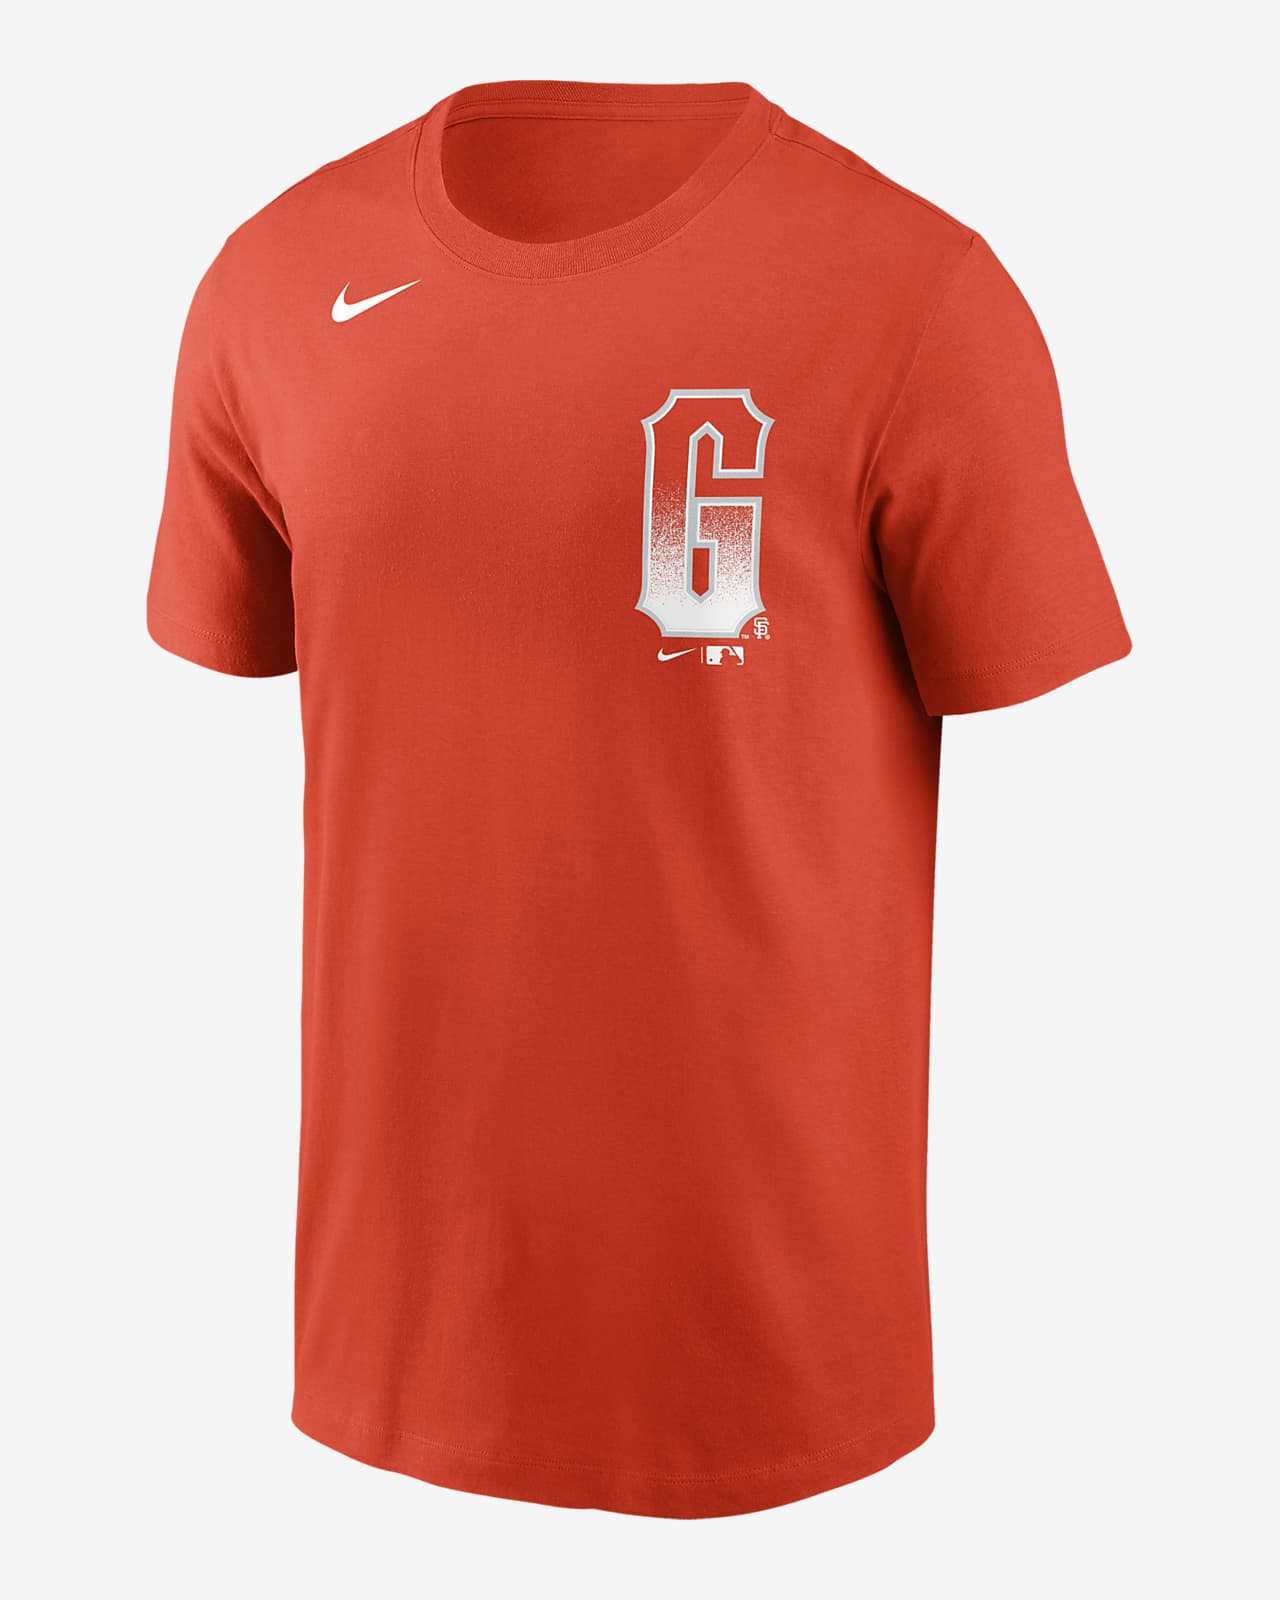 Soedan breng de actie Marine MLB San Francisco Giants City Connect (Mike Yastrzemski) Men's T-Shirt. Nike .com